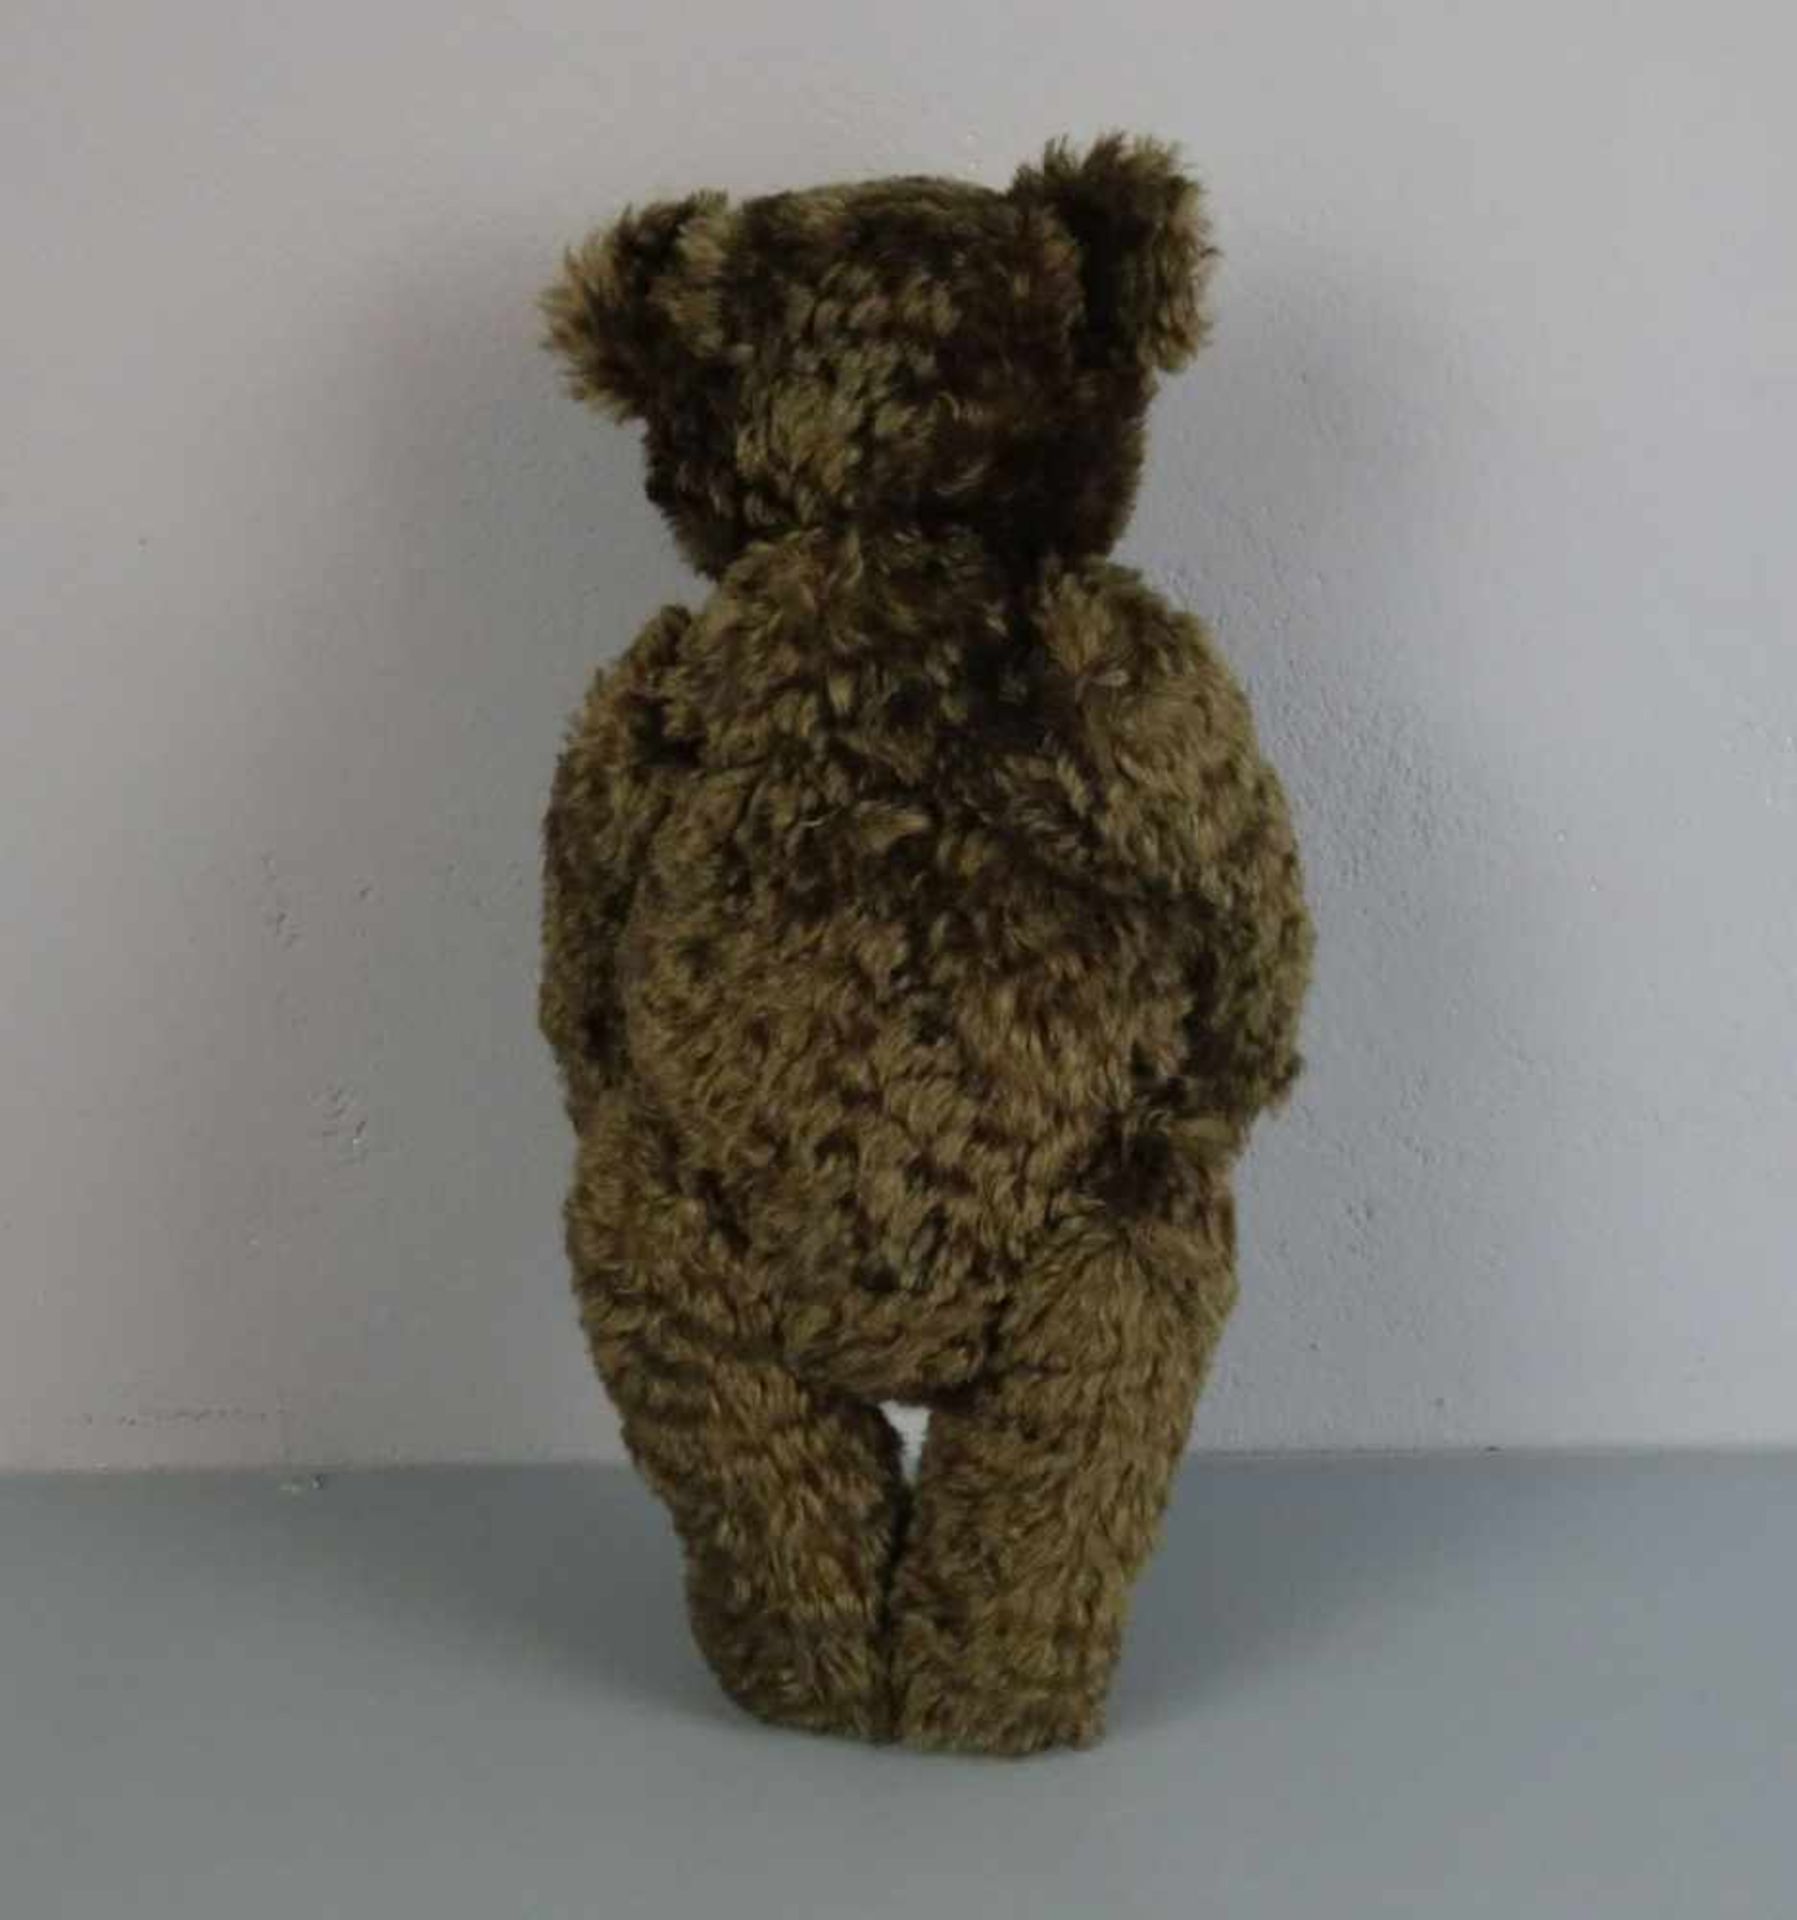 PLÜSCHTIER / TEDDYBÄR - "Classic Teddybär 1920" / teddy bear, 2. H. 20. Jh., Mohair und Filz; - Bild 3 aus 5